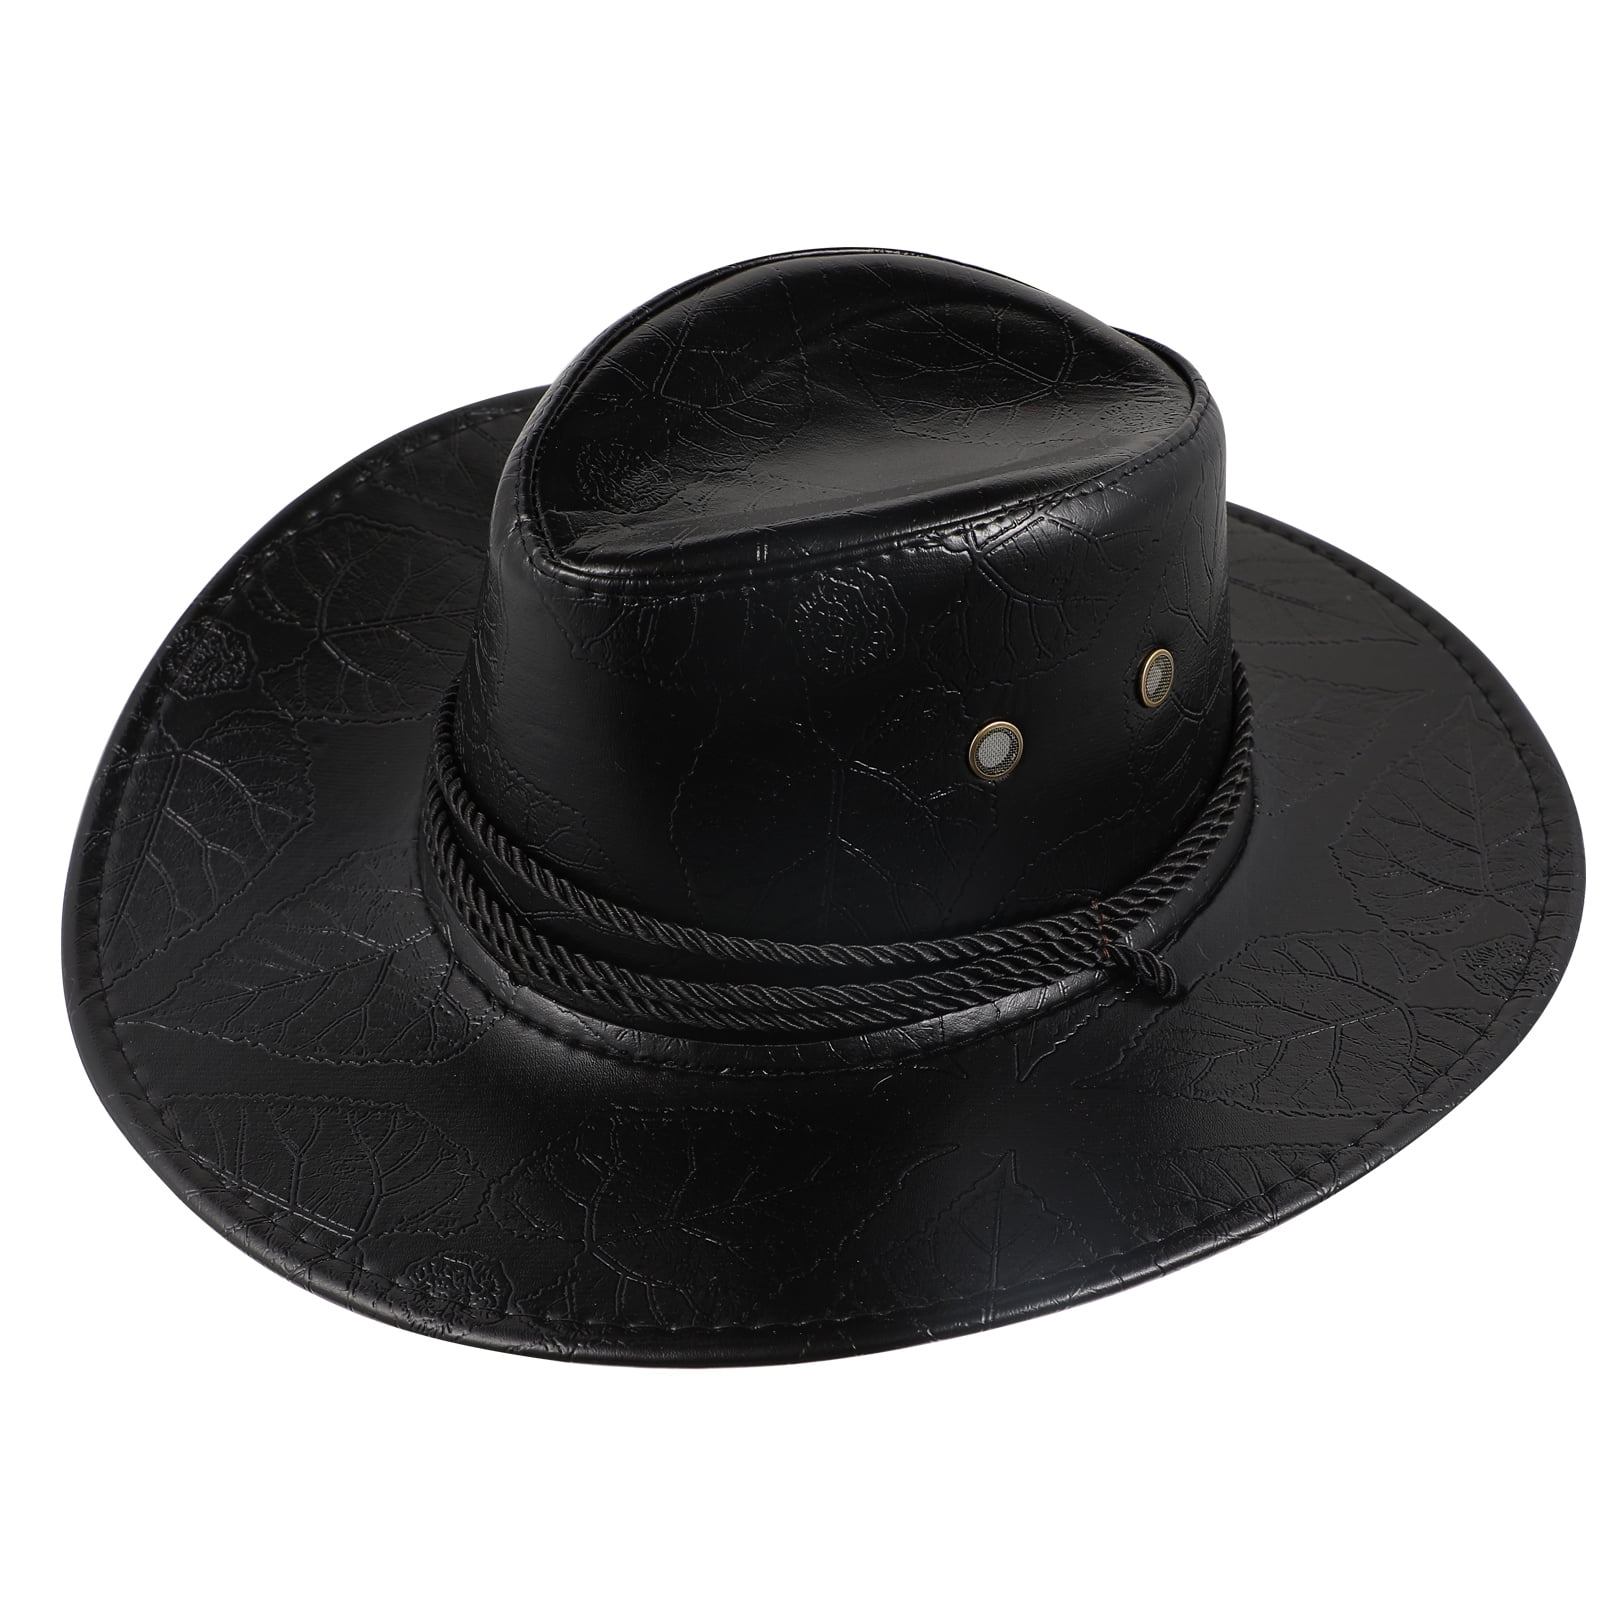 Silva lining designing Mens hat Funny hat for Men Hat for Guys Black hat  for Men Leather Patch hat Personalized hat